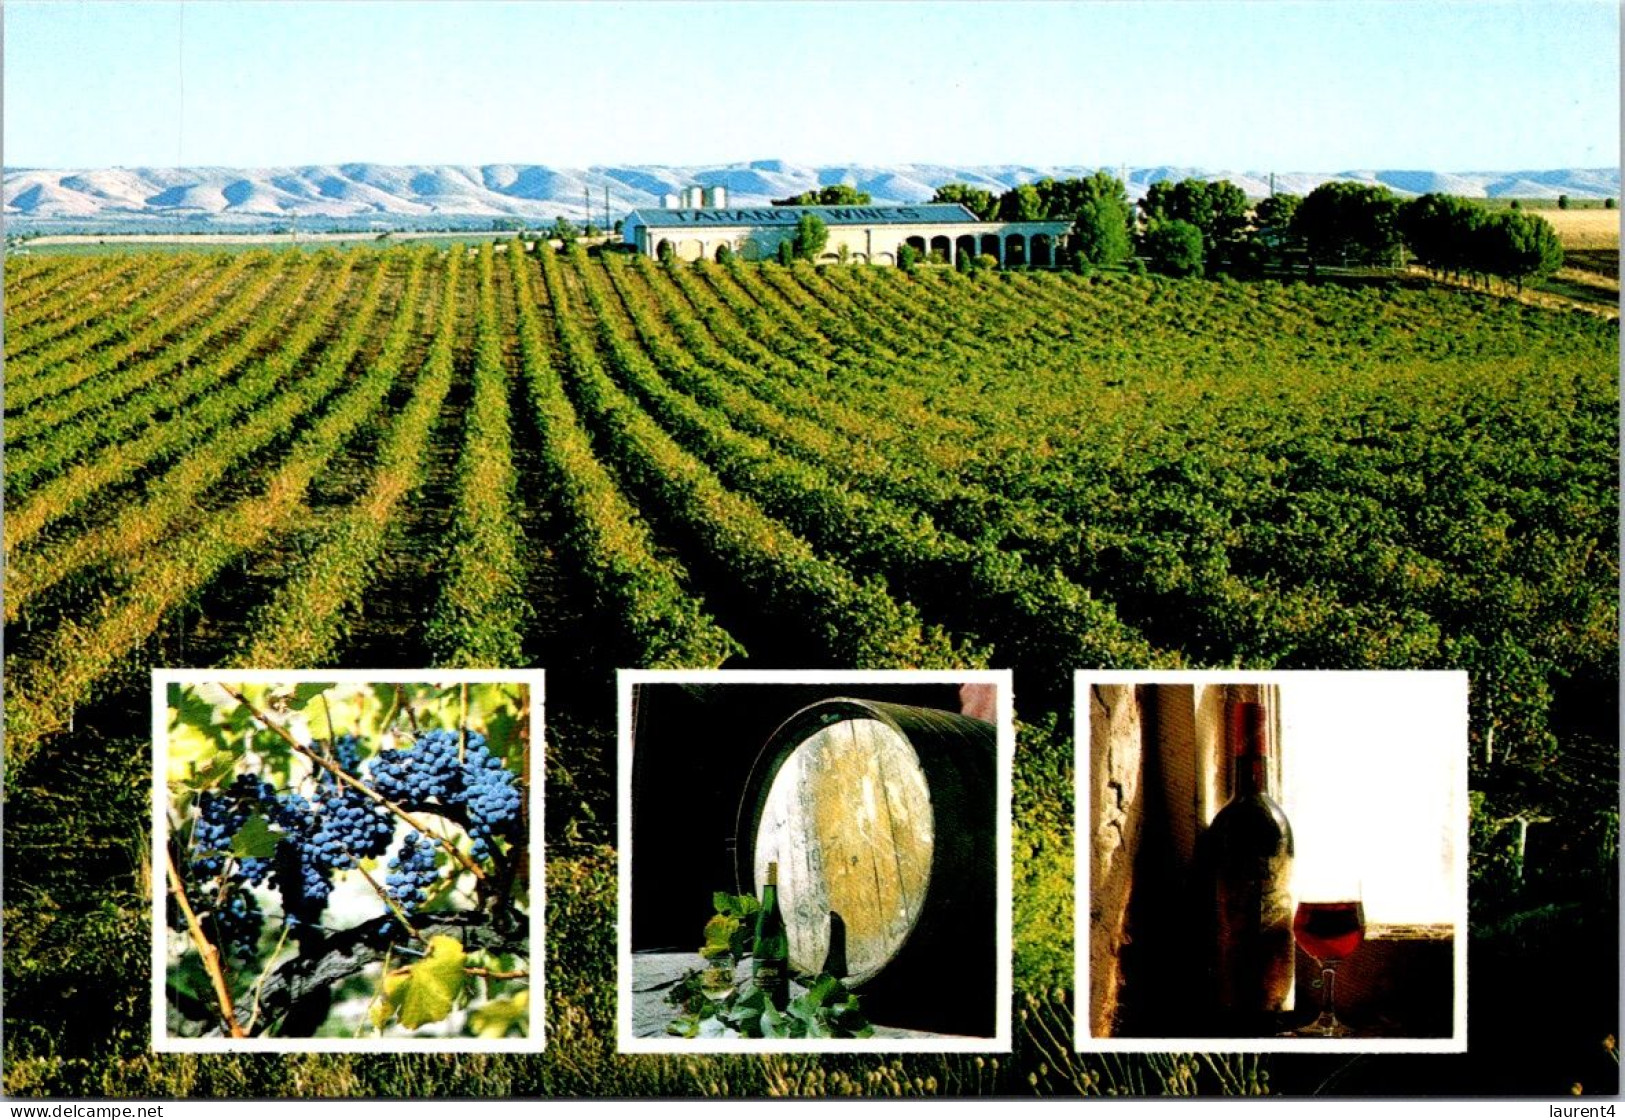 32-1-2024 (2 X 10) Australia (2 Pre-pai Maxicqrd) South Australia (SA) Wineyard & Shops - Barossa Valley